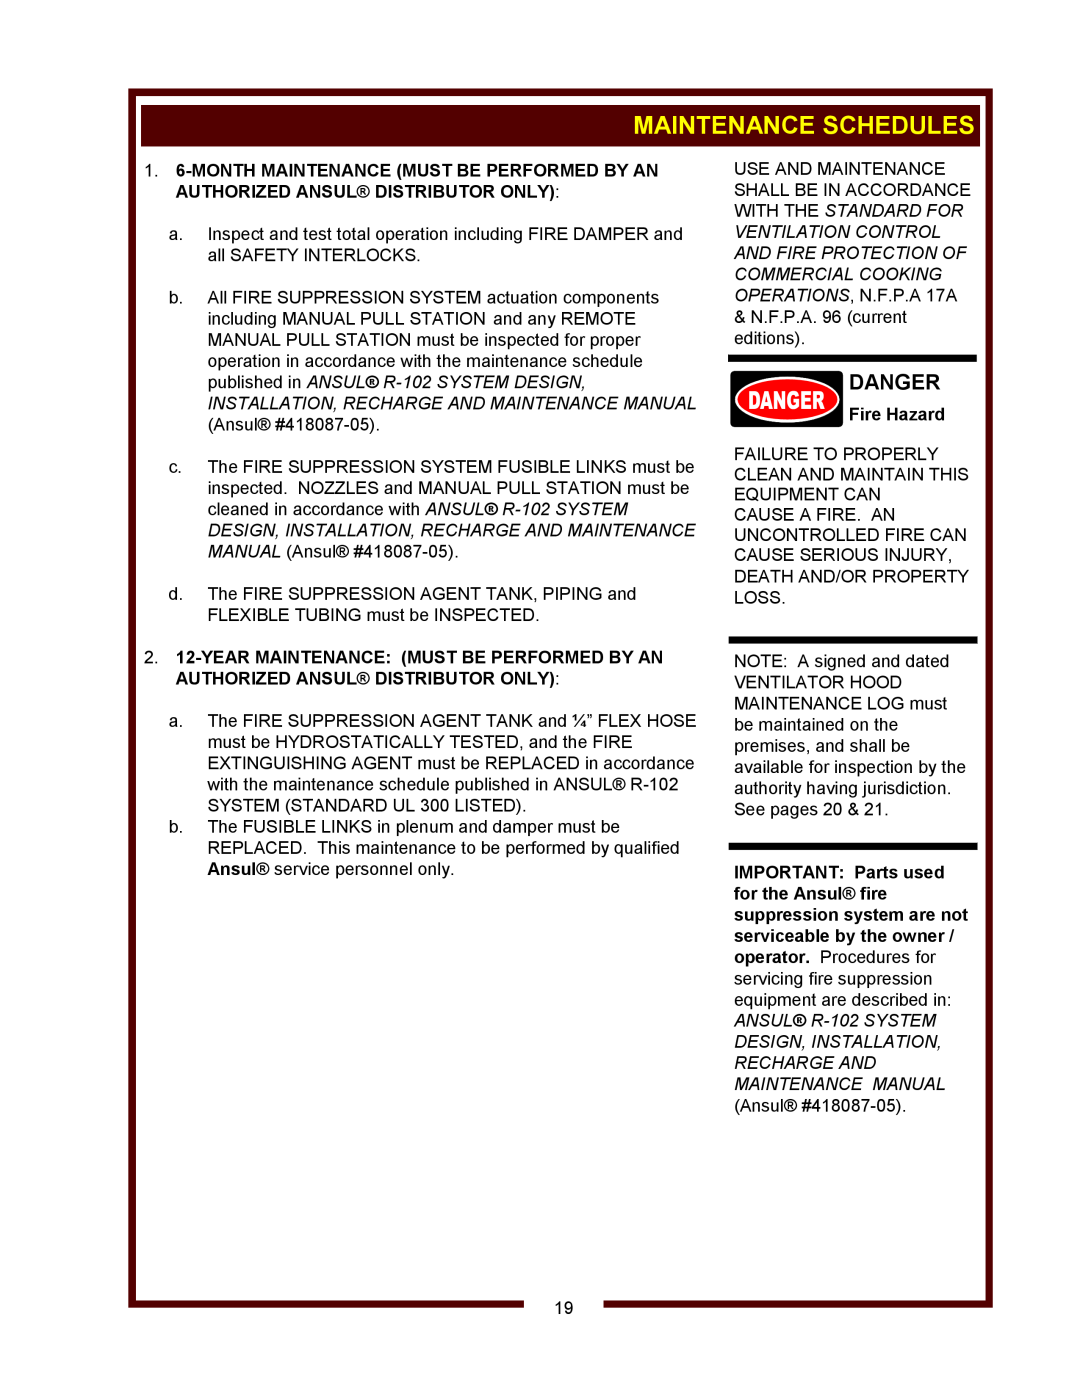 Wells WV-4HSRW operation manual Maintenance Schedules, Danger, Fire Hazard 